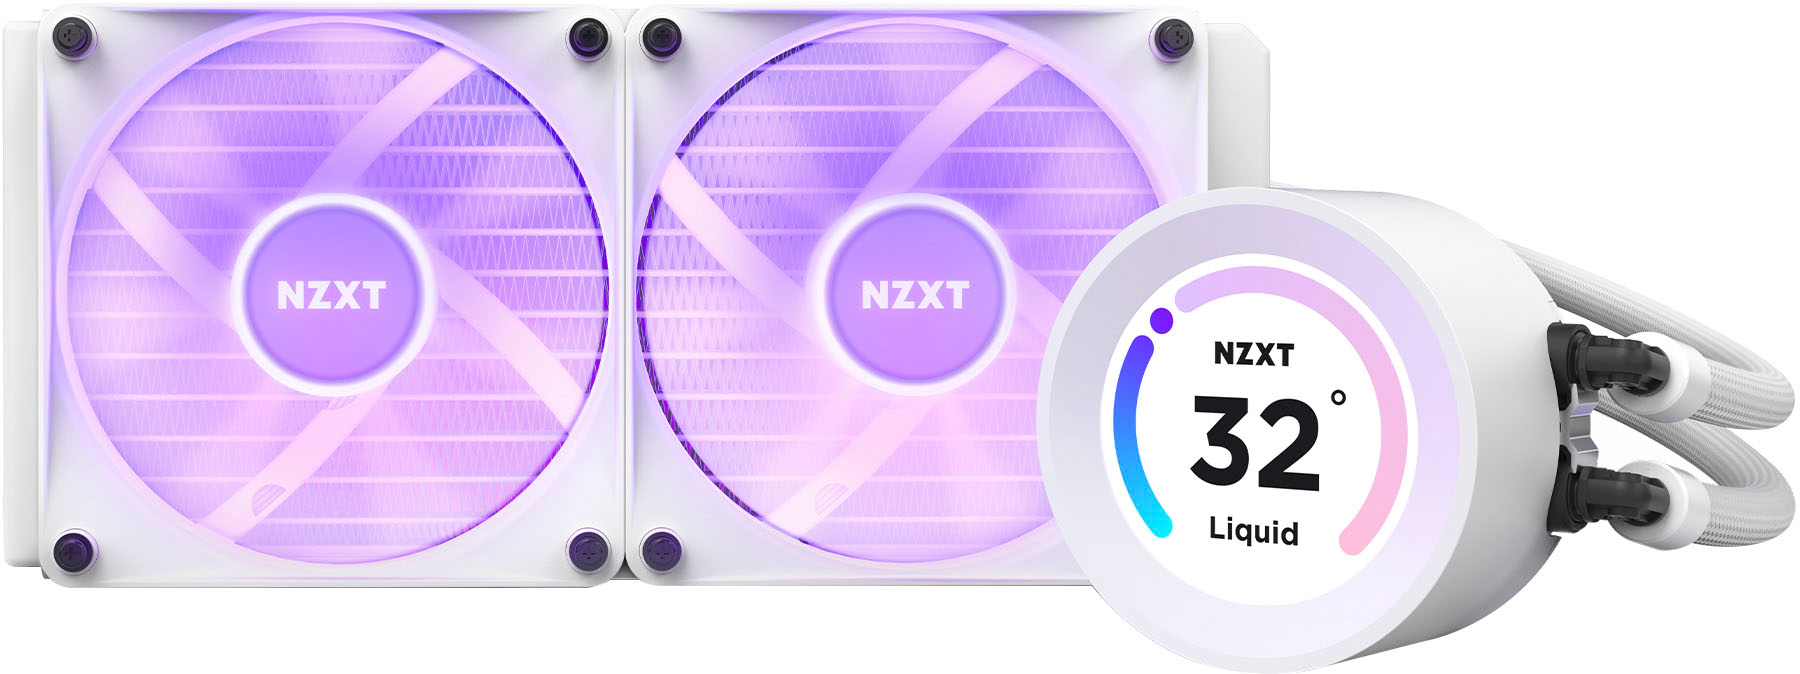 NZXT RL-KR24E-W1 Kraken Elite RGB 240 White AIO Liquid CPU Cooler